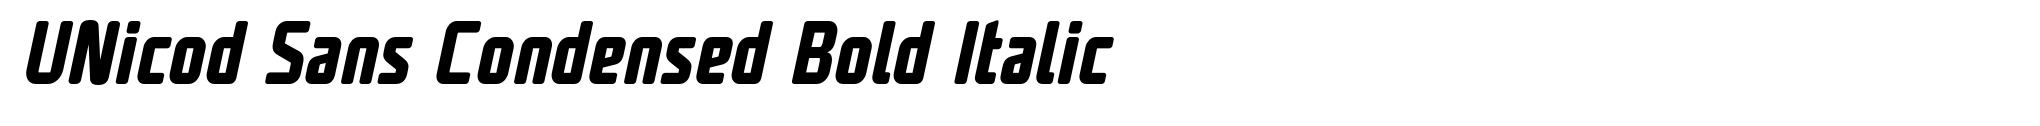 UNicod Sans Condensed Bold Italic image